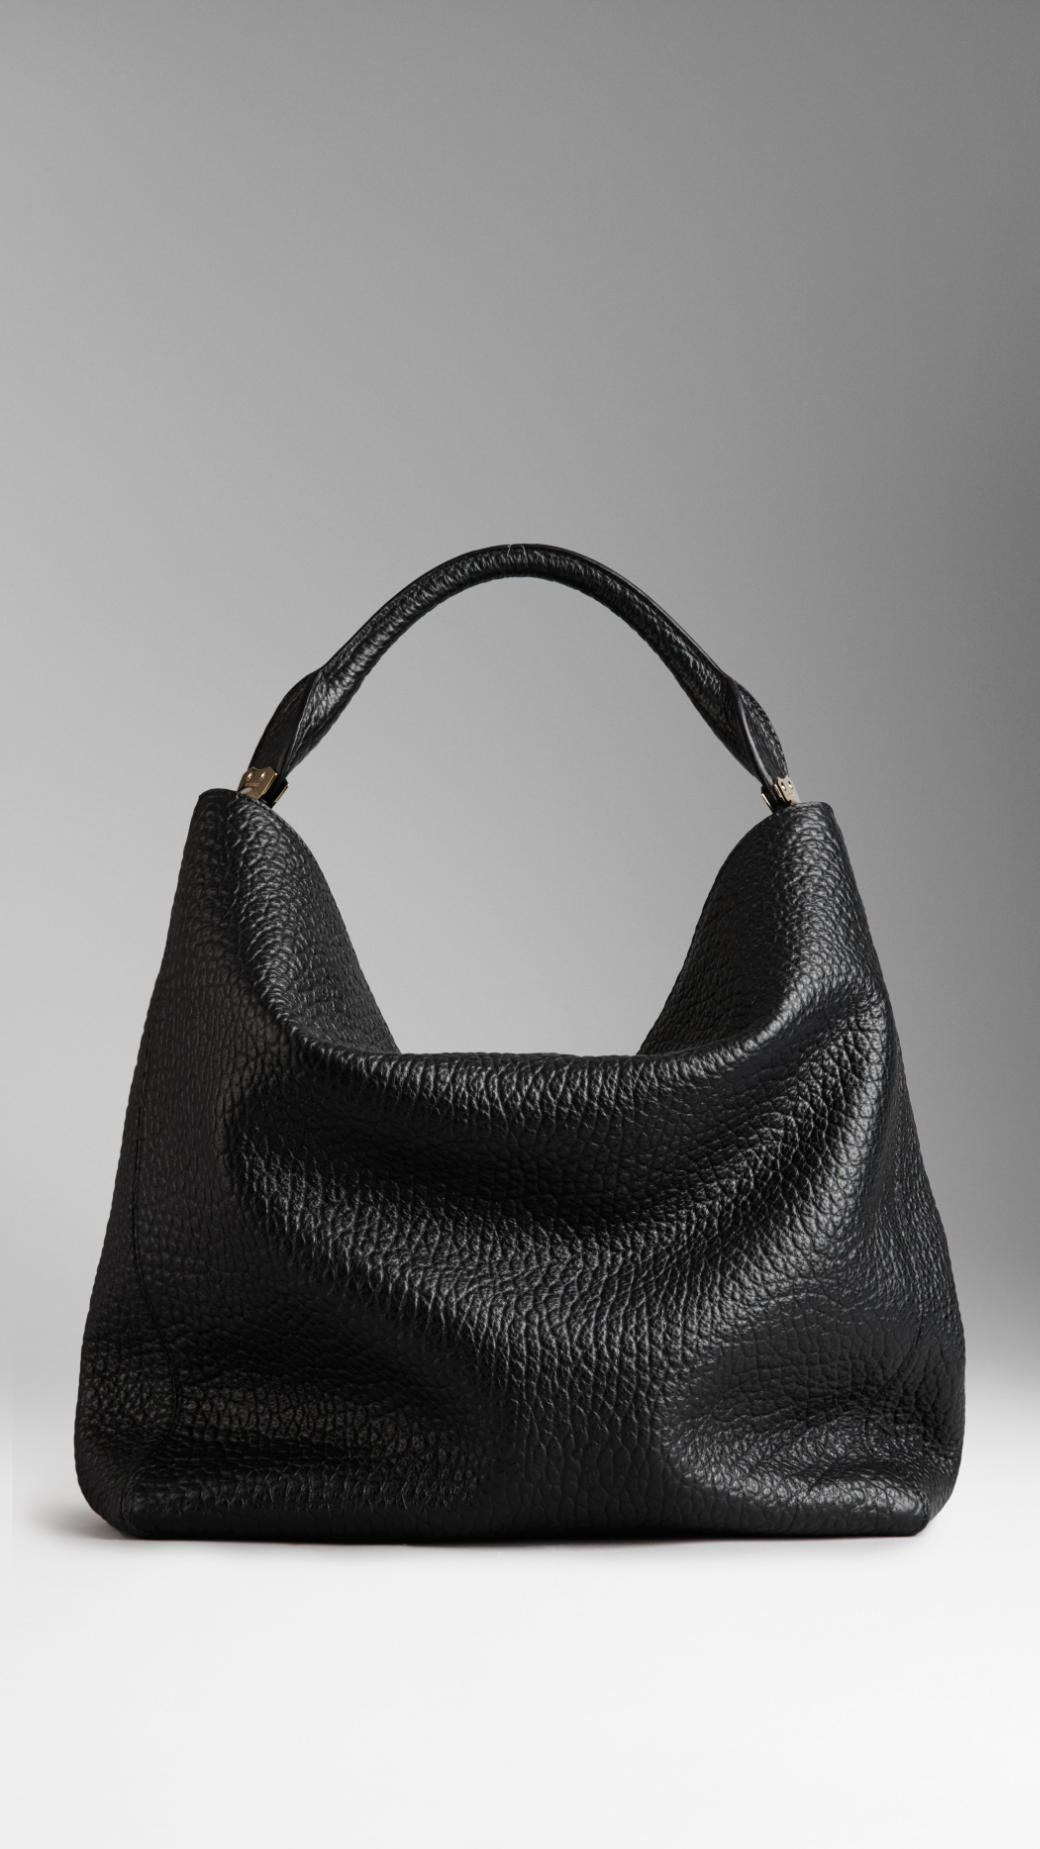 Burberry Medium Signature Grain Leather Hobo Bag in Black - Lyst